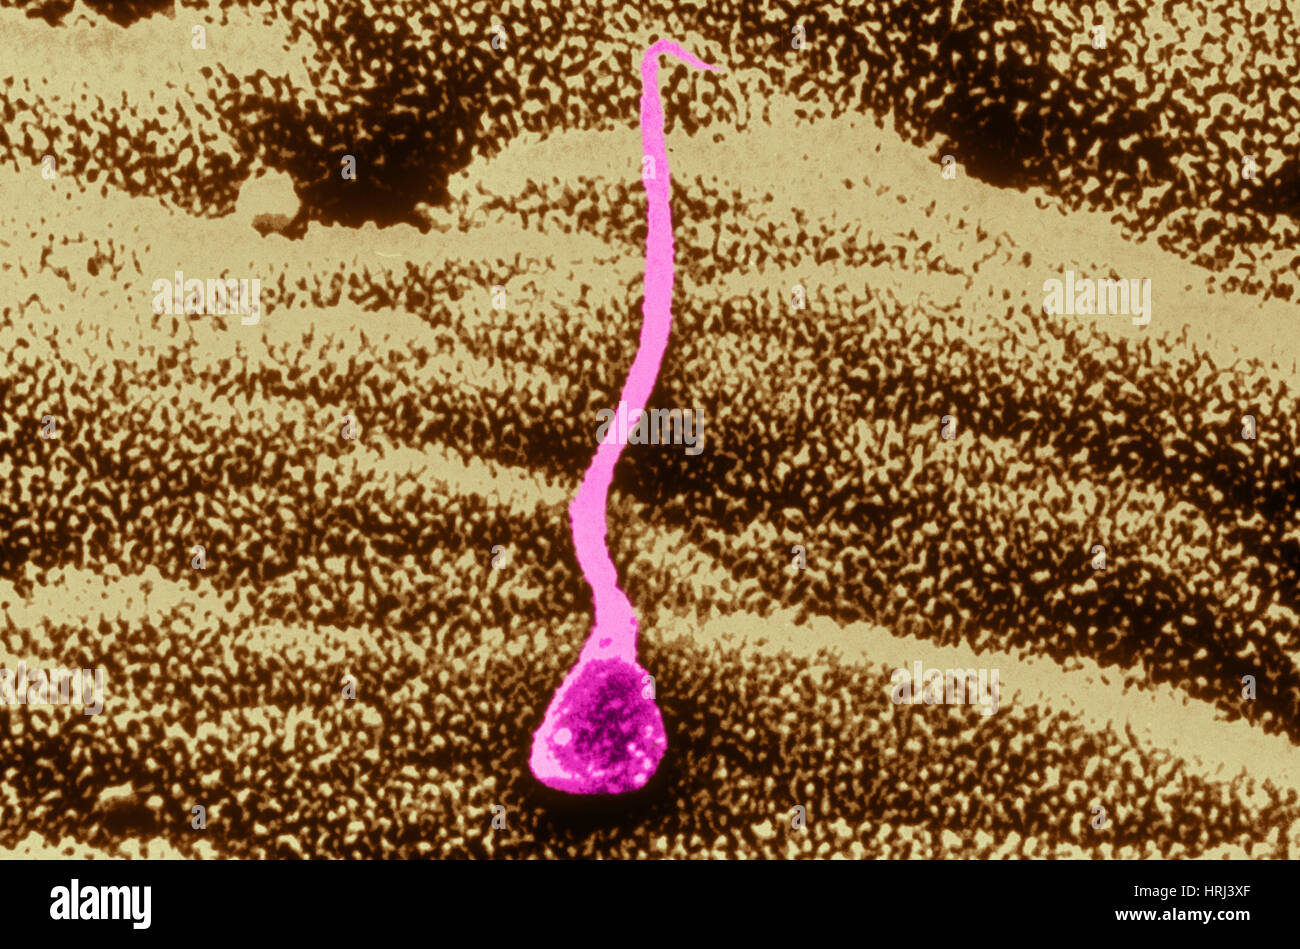 Human sperm in uterus Stock Photo